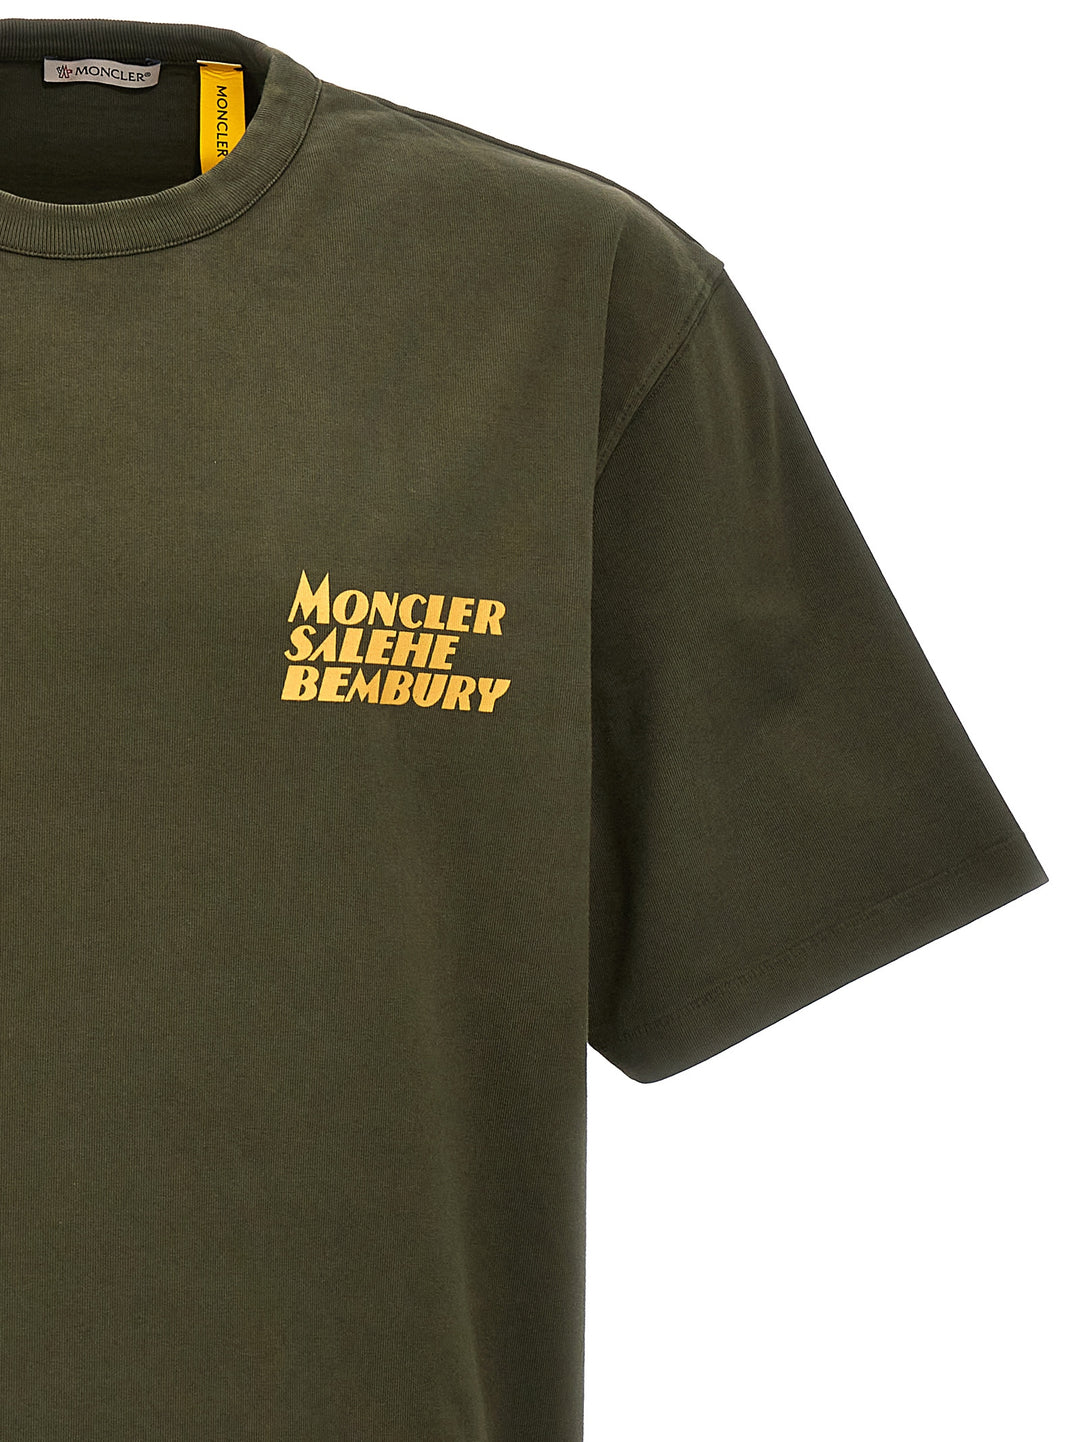 Moncler Genius X Salehe Bembury T Shirt Verde